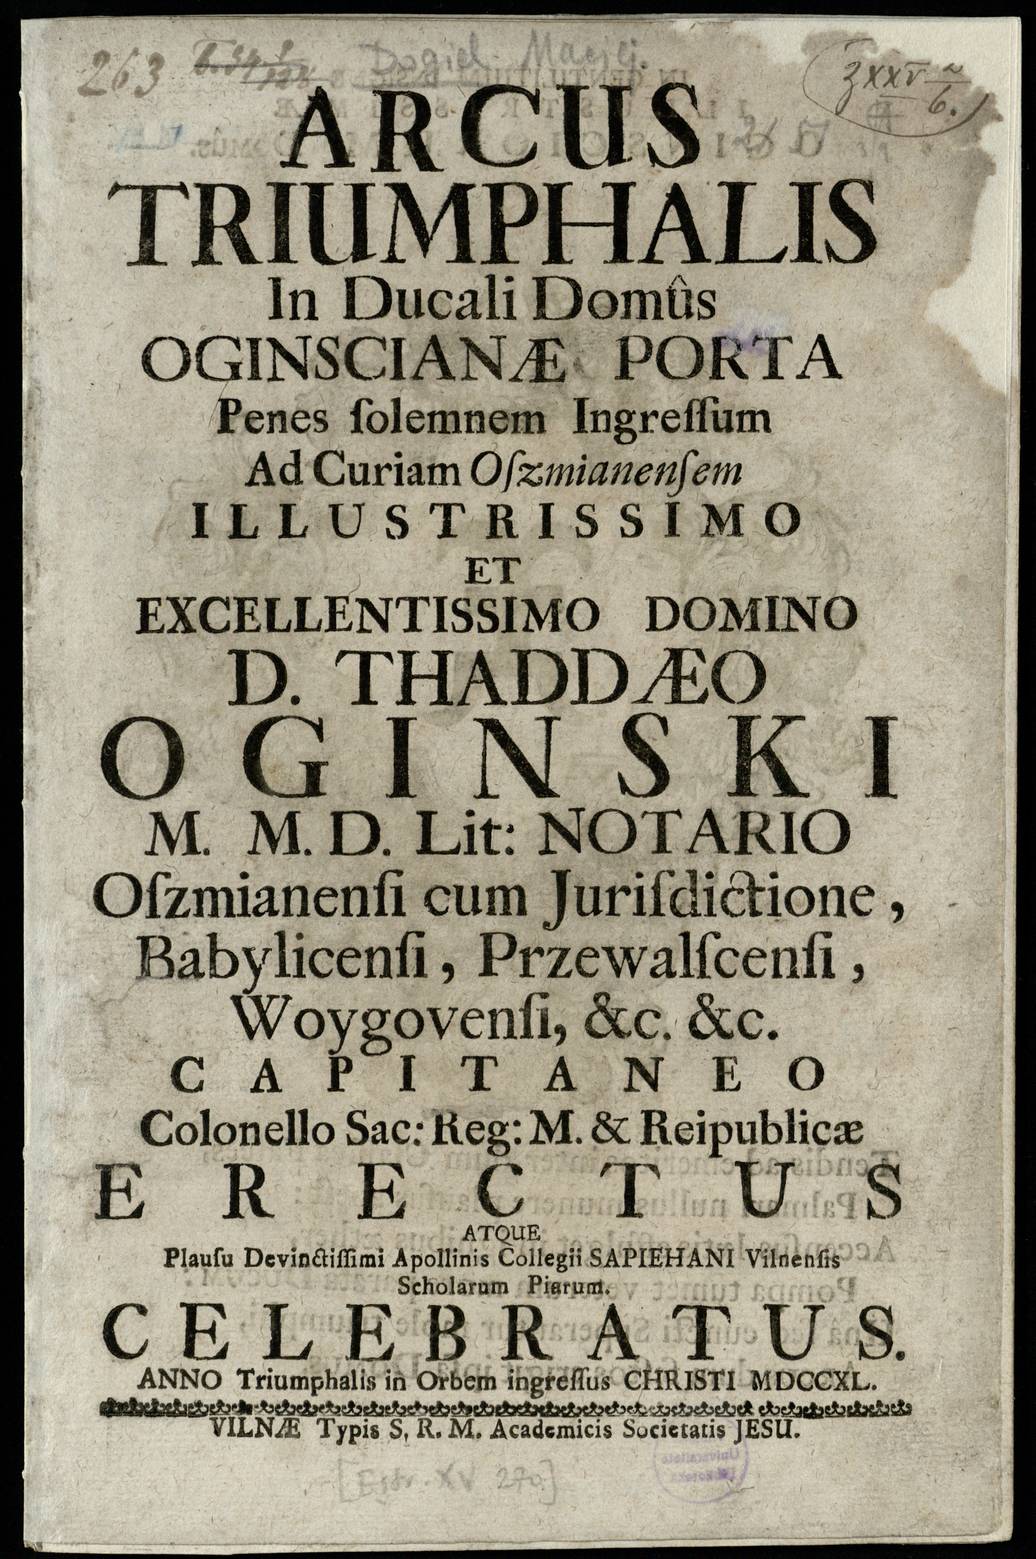  Arcus triumphalis in ducali domus Oginscianae porta [...]